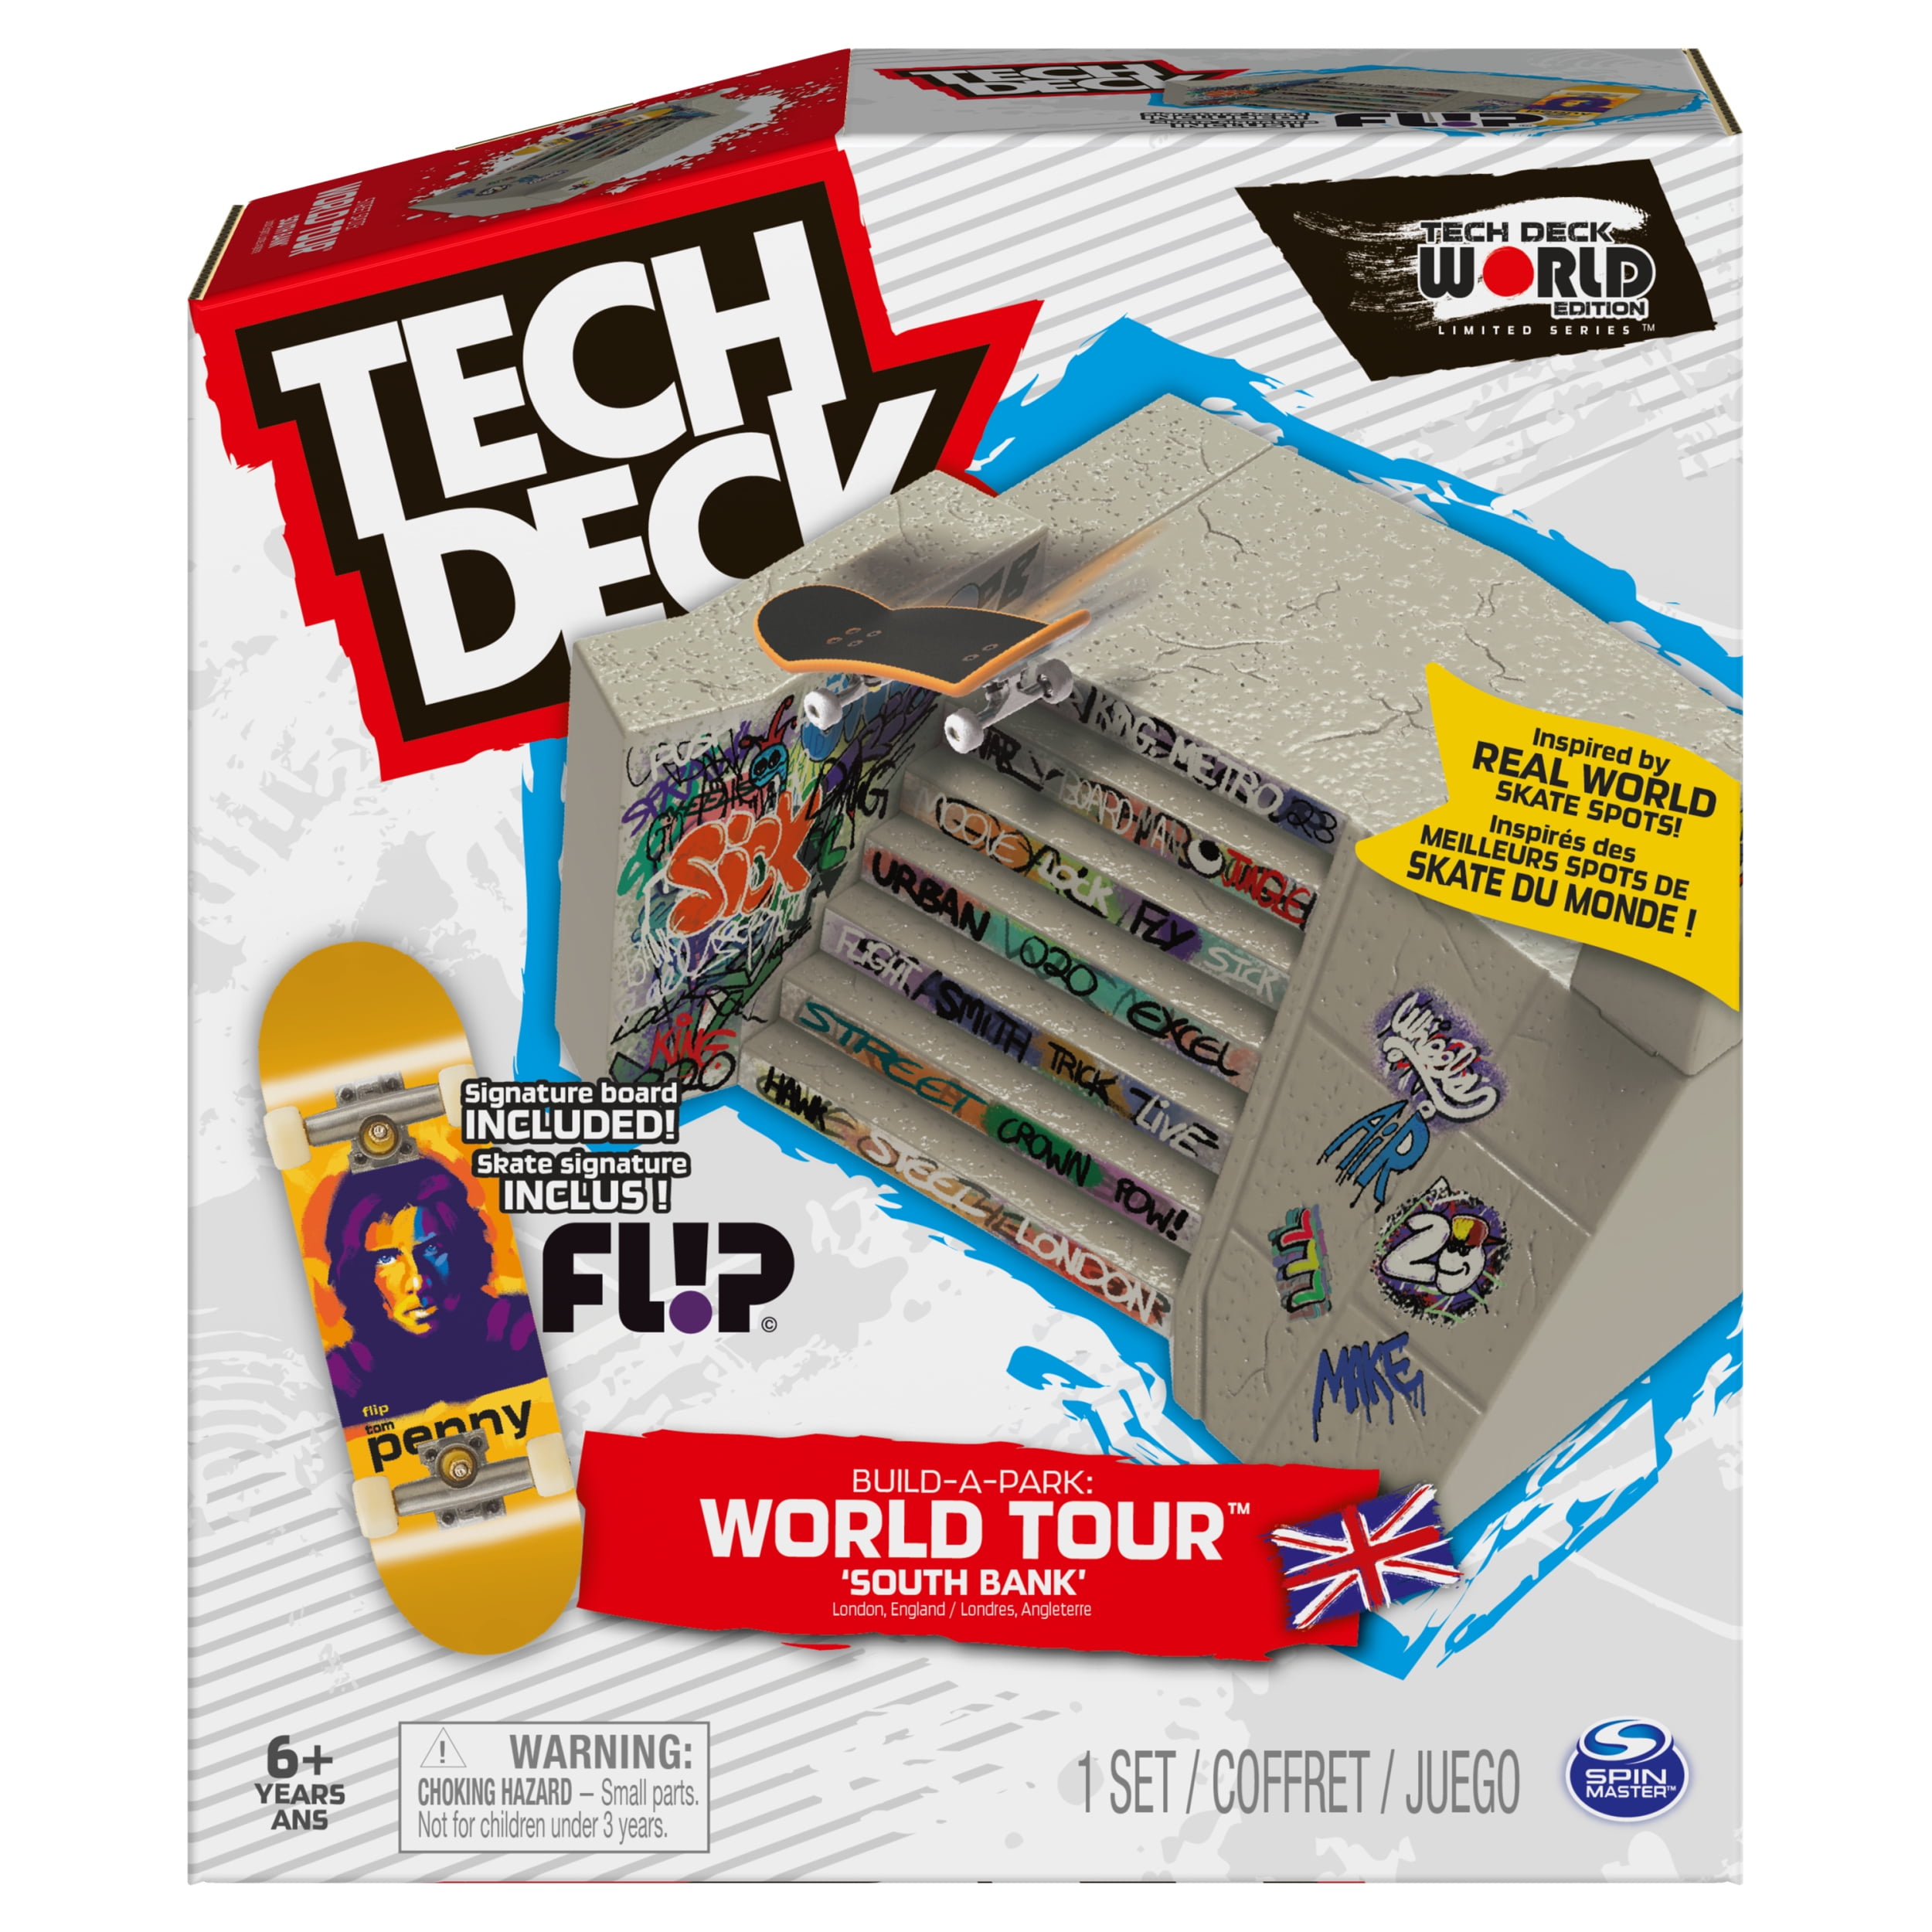 Tech Deck, Build-A-Park World Tour, South Bank, Ramp Set with Signature  Fingerboard